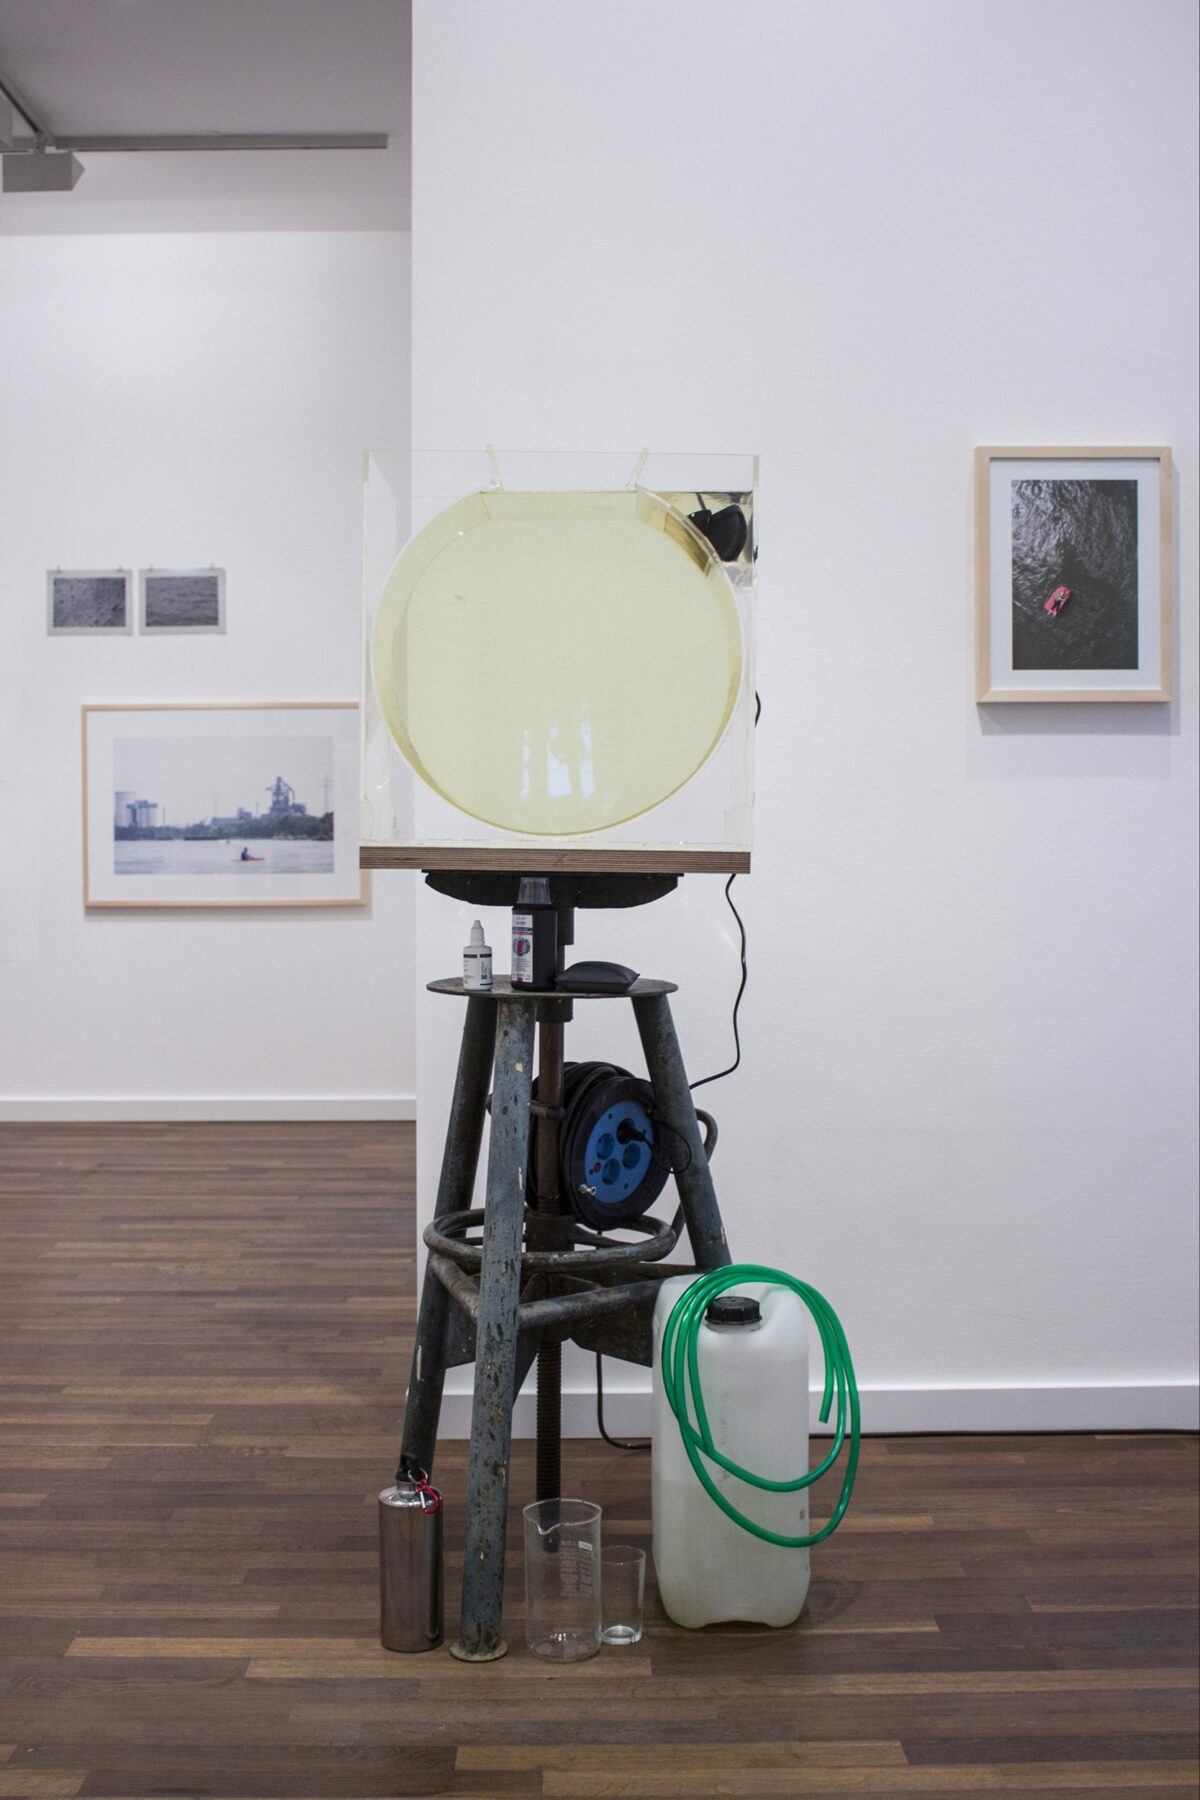 Medusa : floating body #2, exhibition view, living medusa, Galerie Crone Berlin, 2019